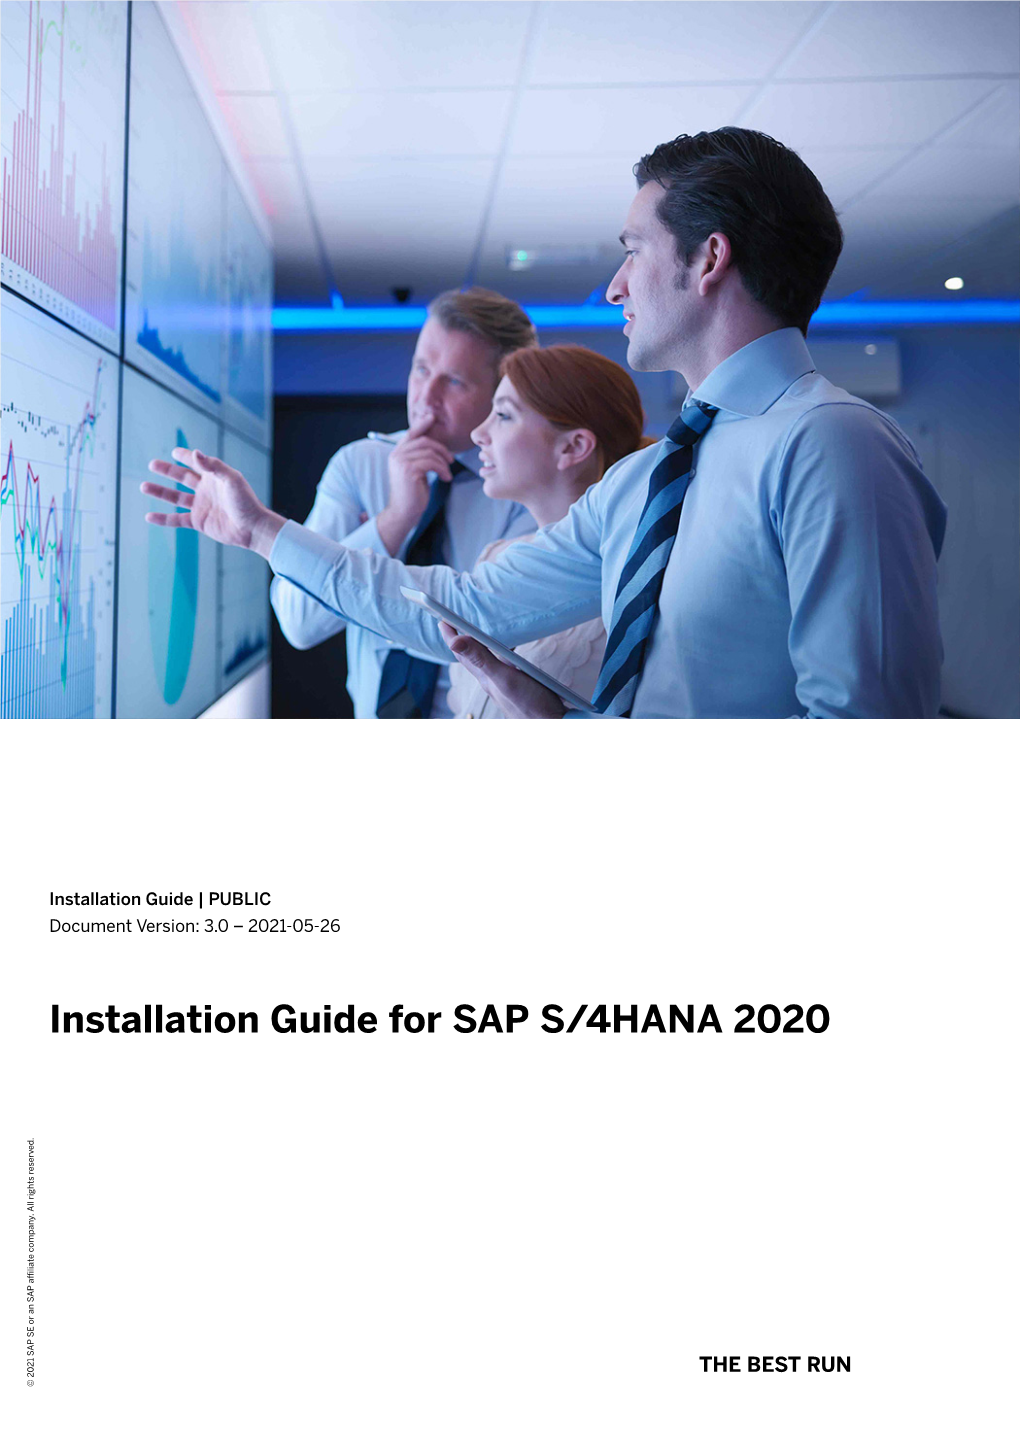 Installation Guide for SAP S/4HANA 2020 Company